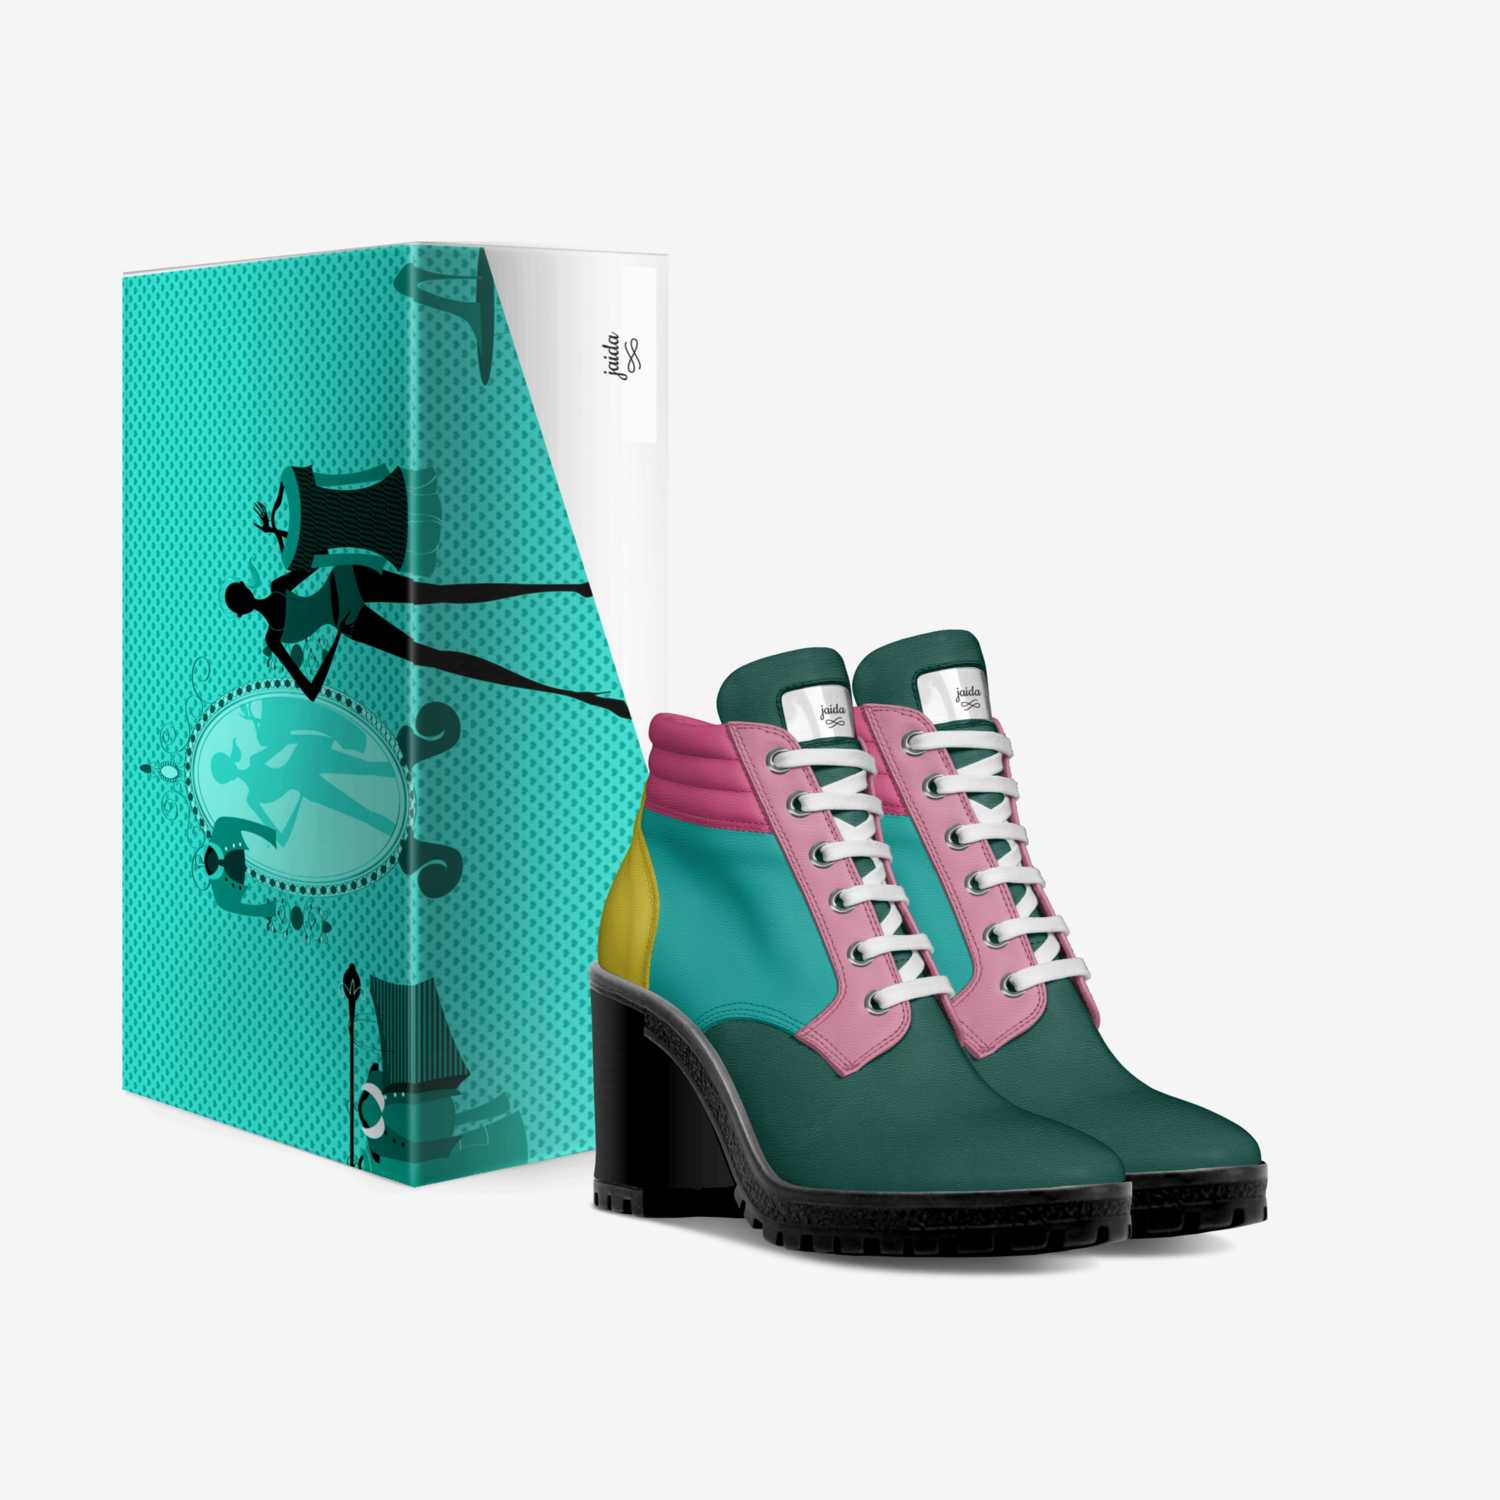 jaida custom made in Italy shoes by J Jones | Box view